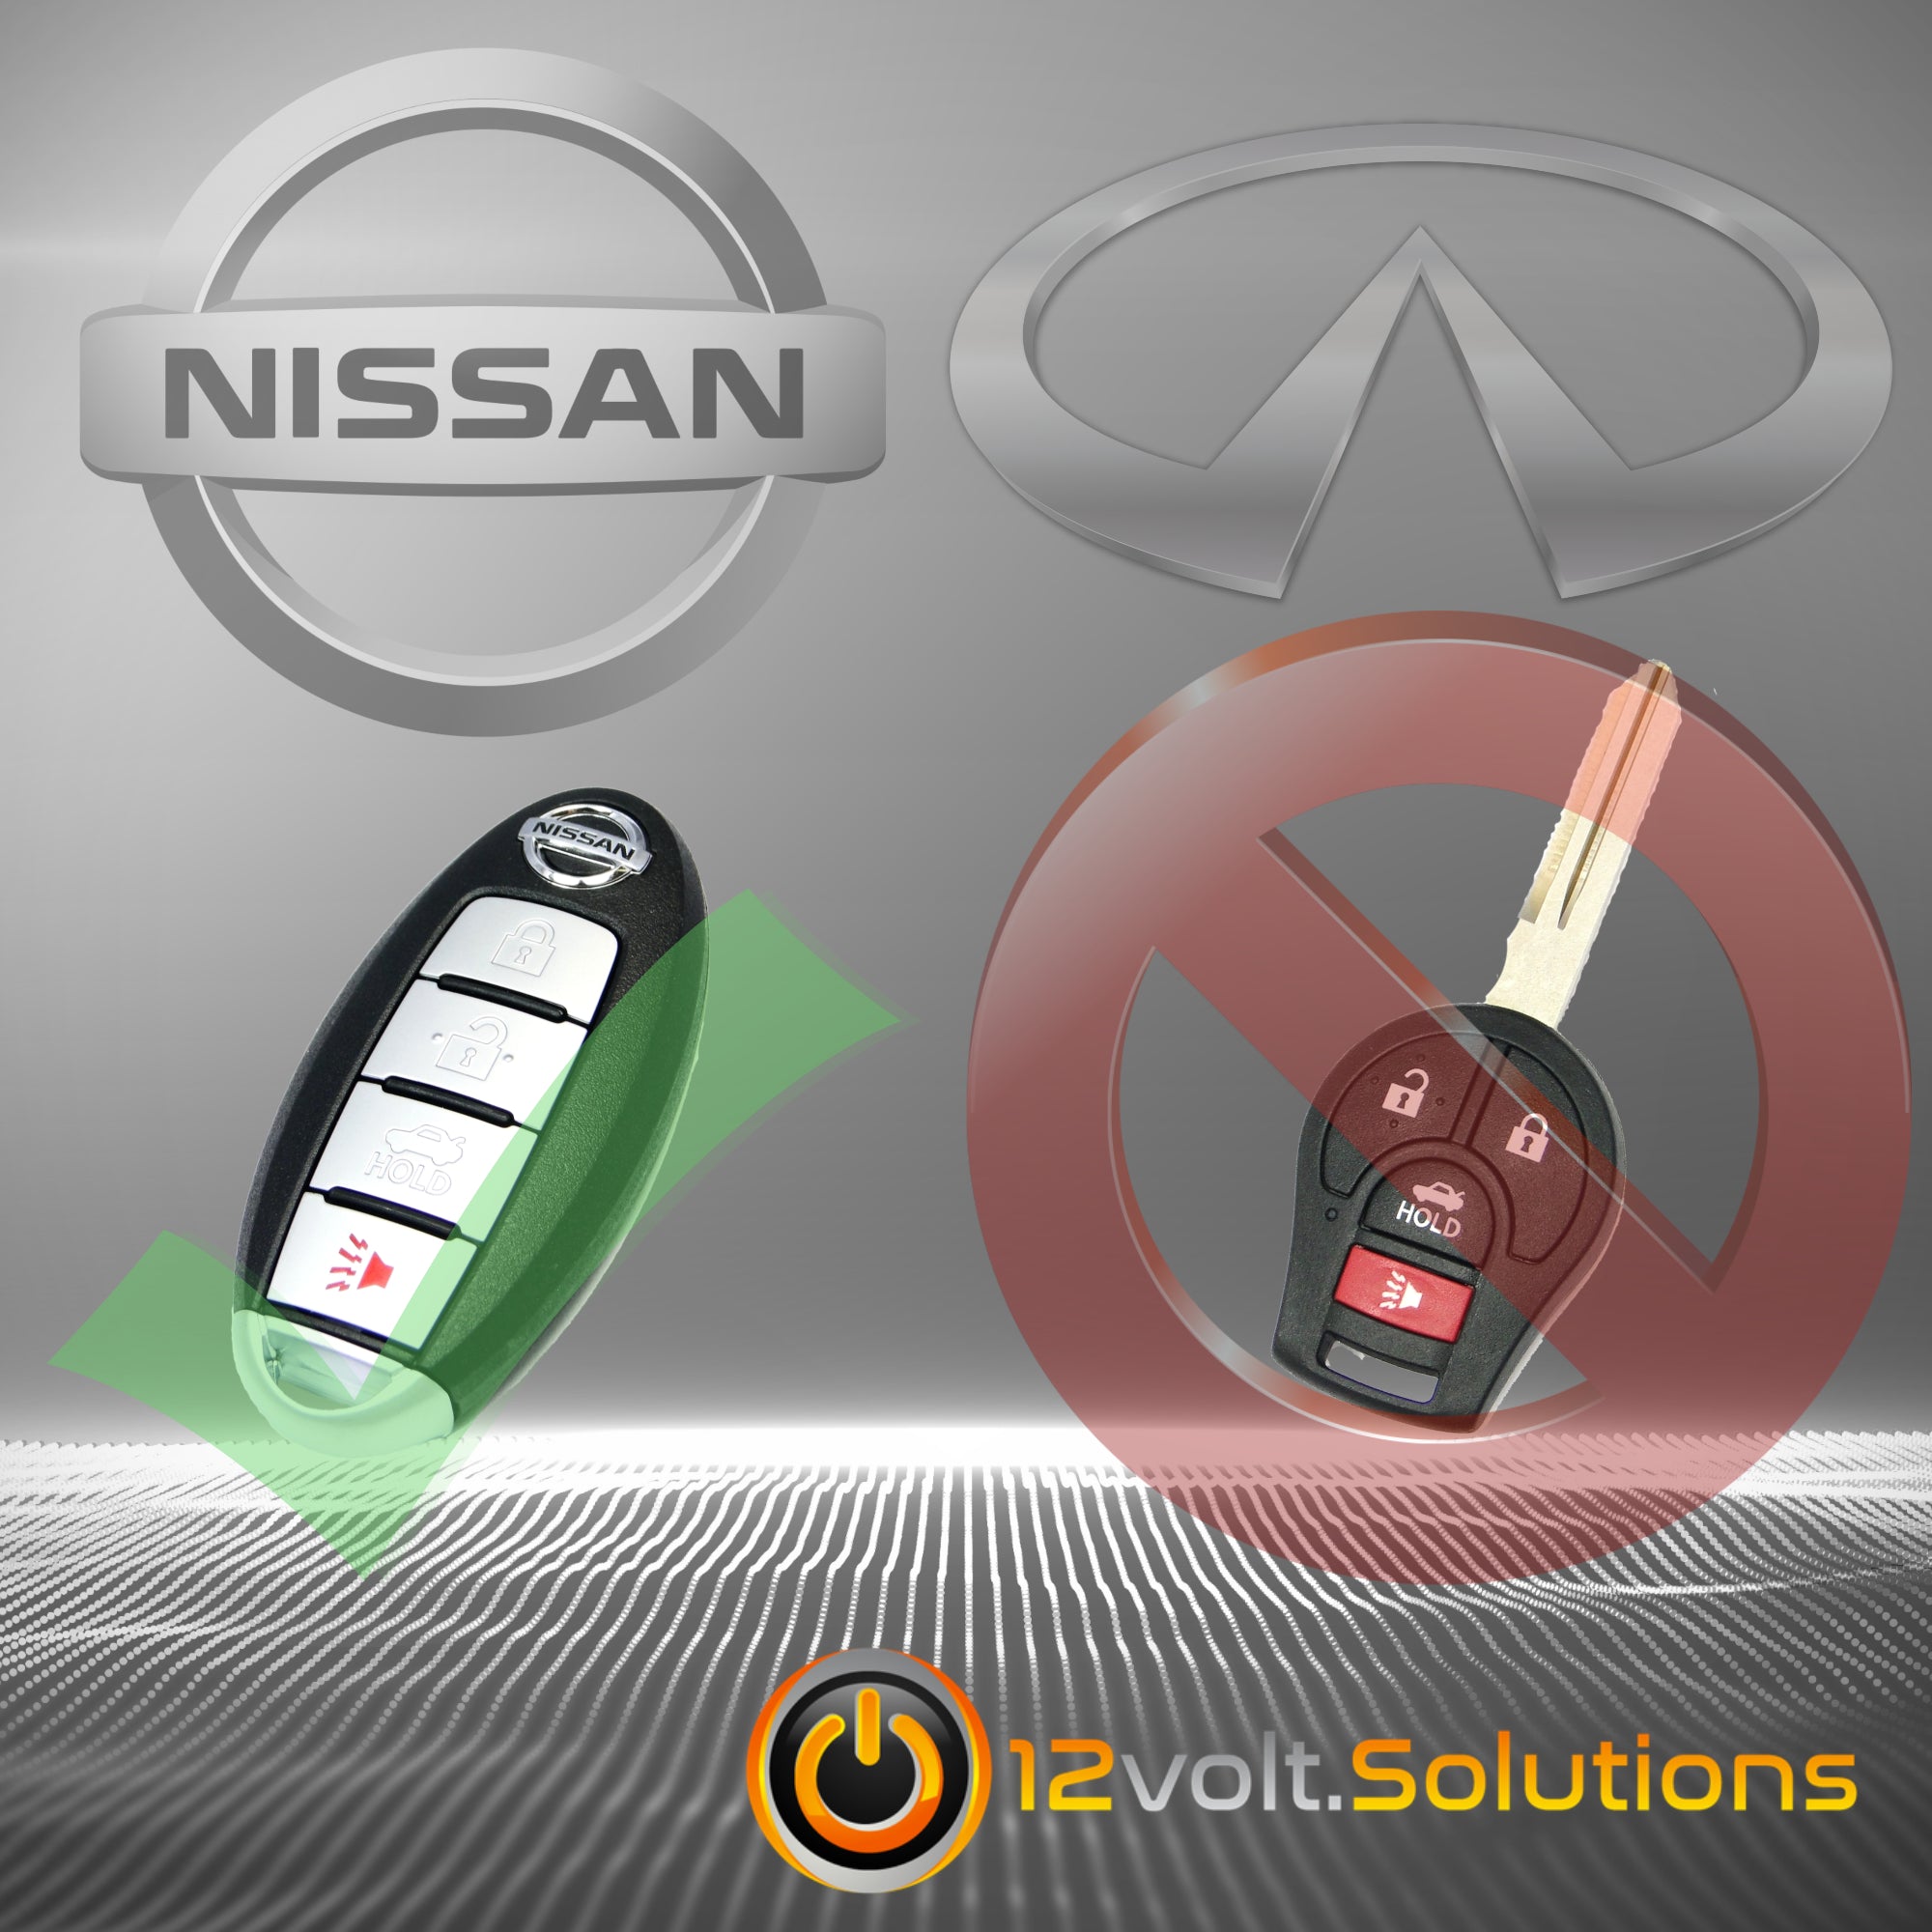 2008-2013 Nissan Rogue Remote Start Plug and Play Kit (Intelligent Key)-12Volt.Solutions